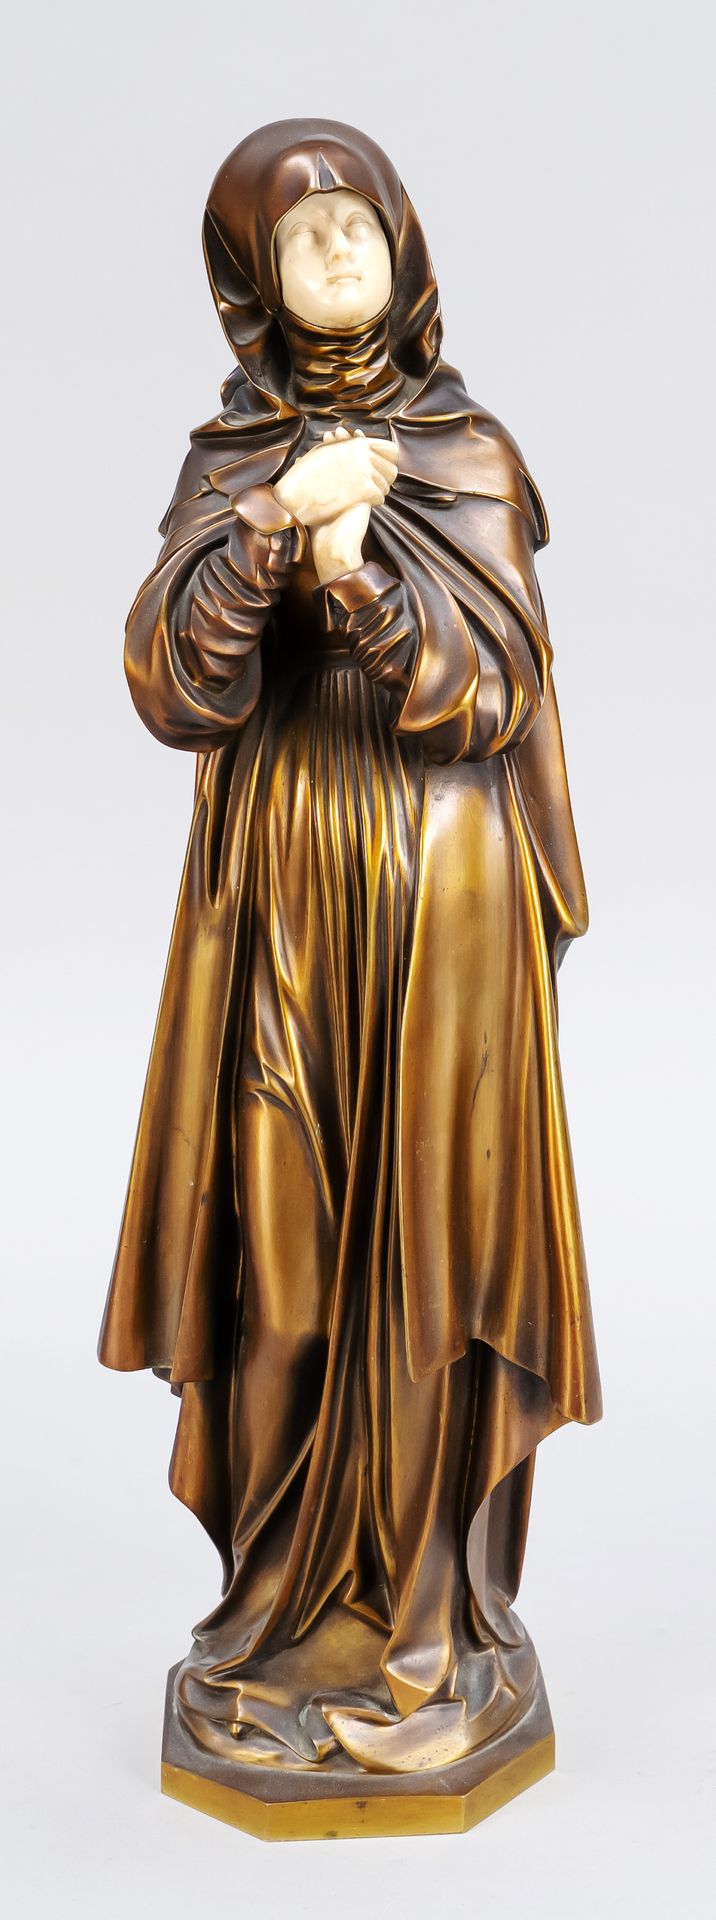 Null 纽伦堡圣母像，约1900年，青铜和象牙，侧面刻有 "Susse Freres Editeurs Paris "的字样，高43厘米。